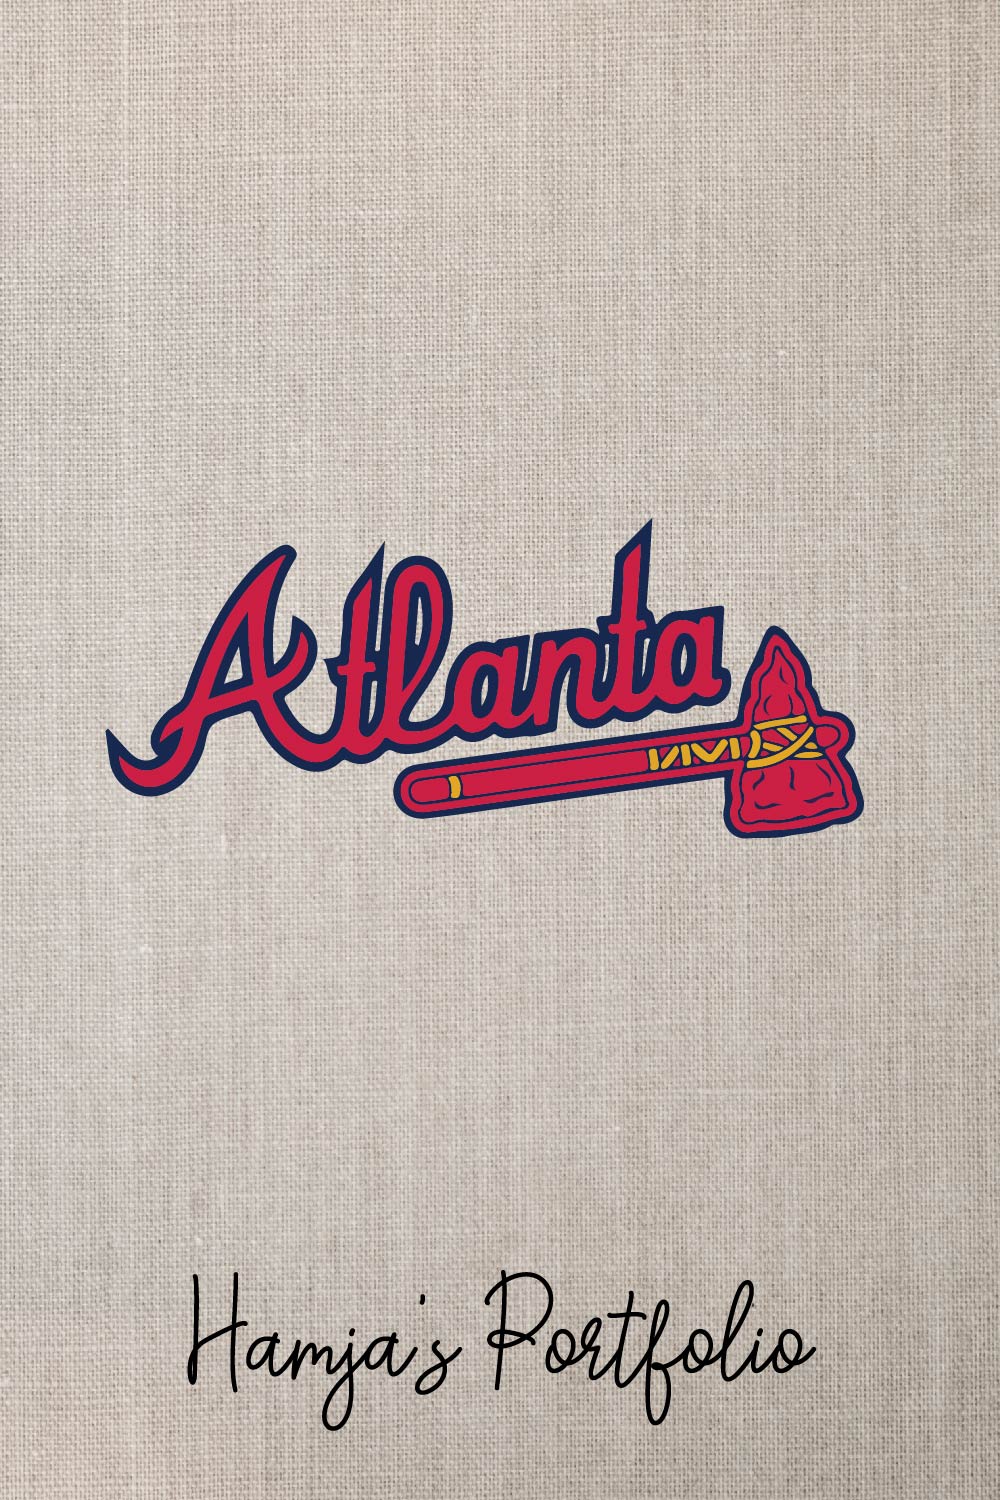 Atlanta Braves Logo Vector Set pinterest preview image.